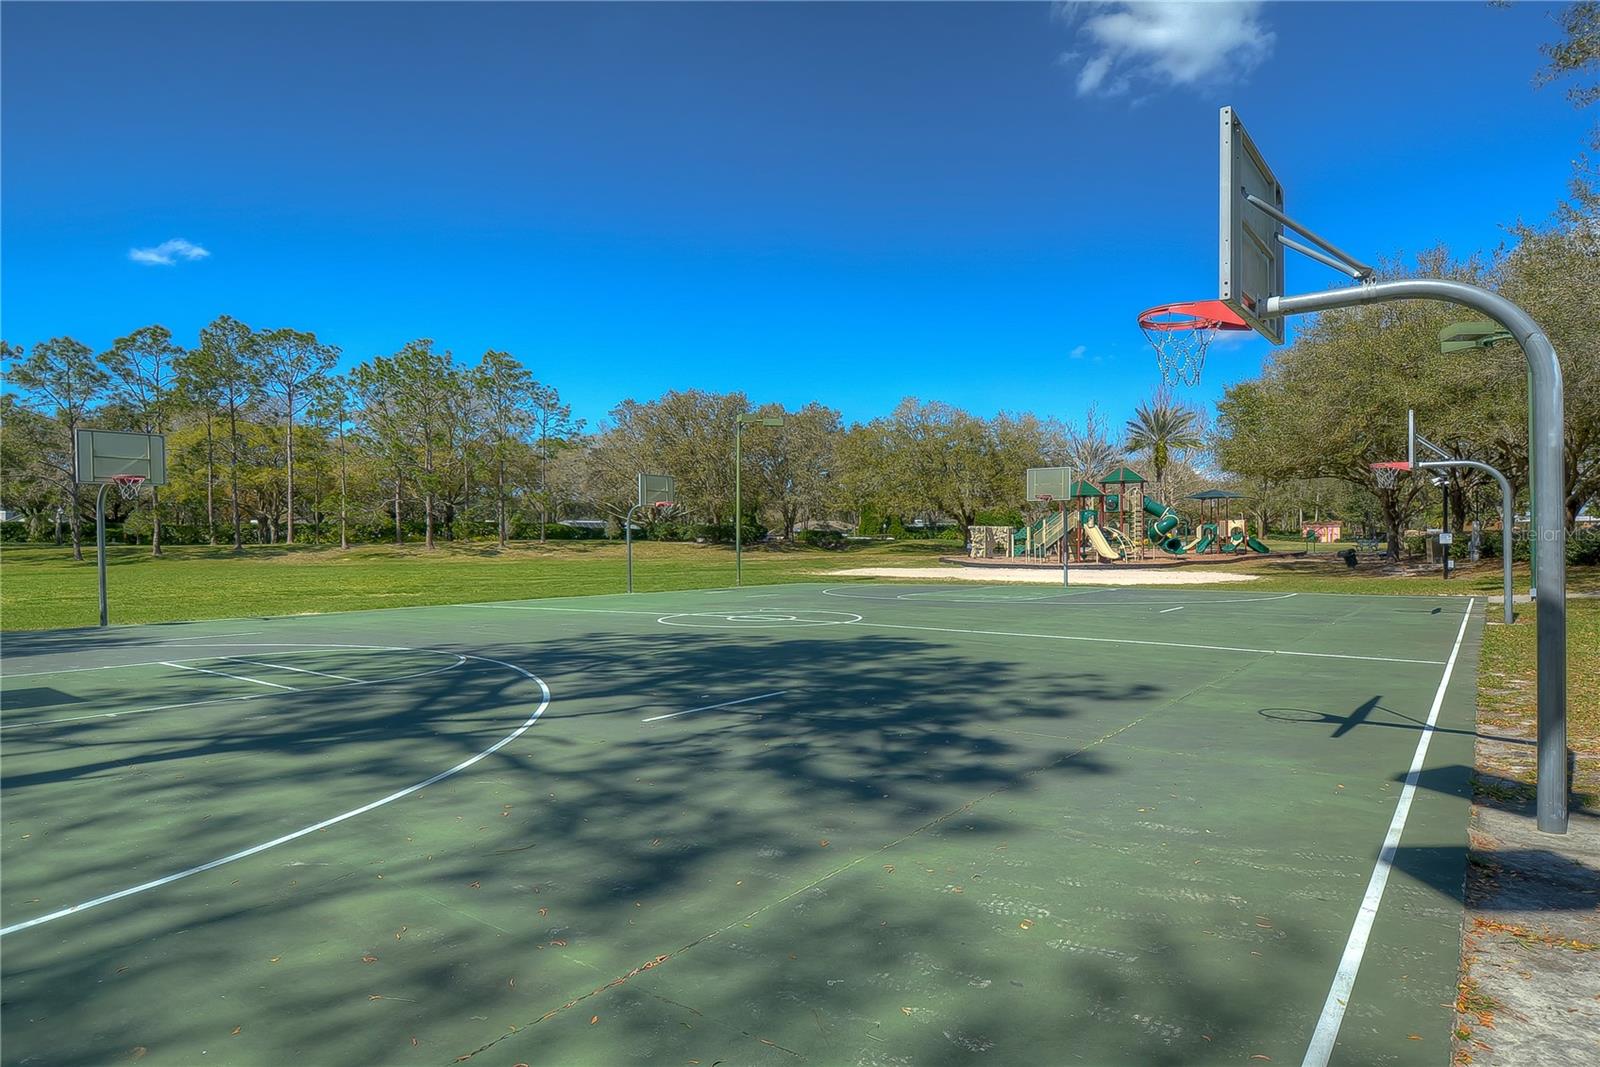 Basketball courts!